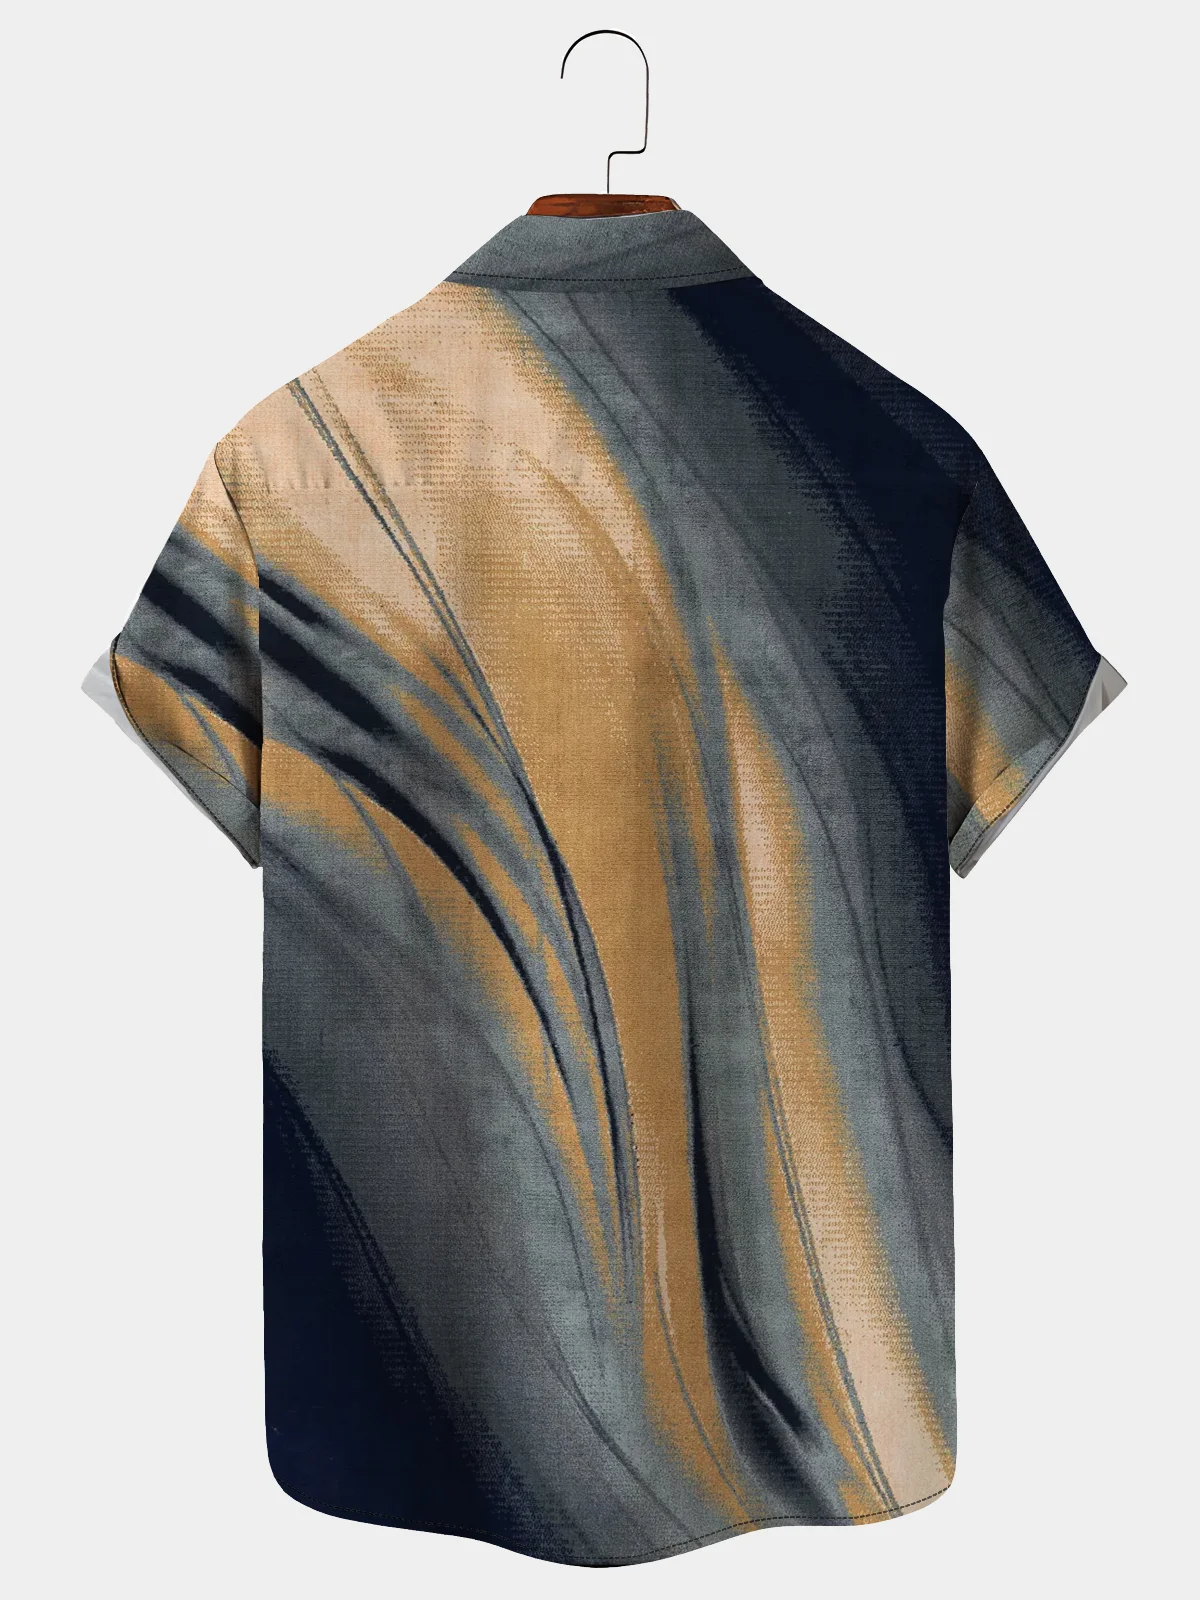 Royaura 50 vintage casual men's Nature  Fiber shirt gradual water ripple vintage stretch oversize Aloha shirt